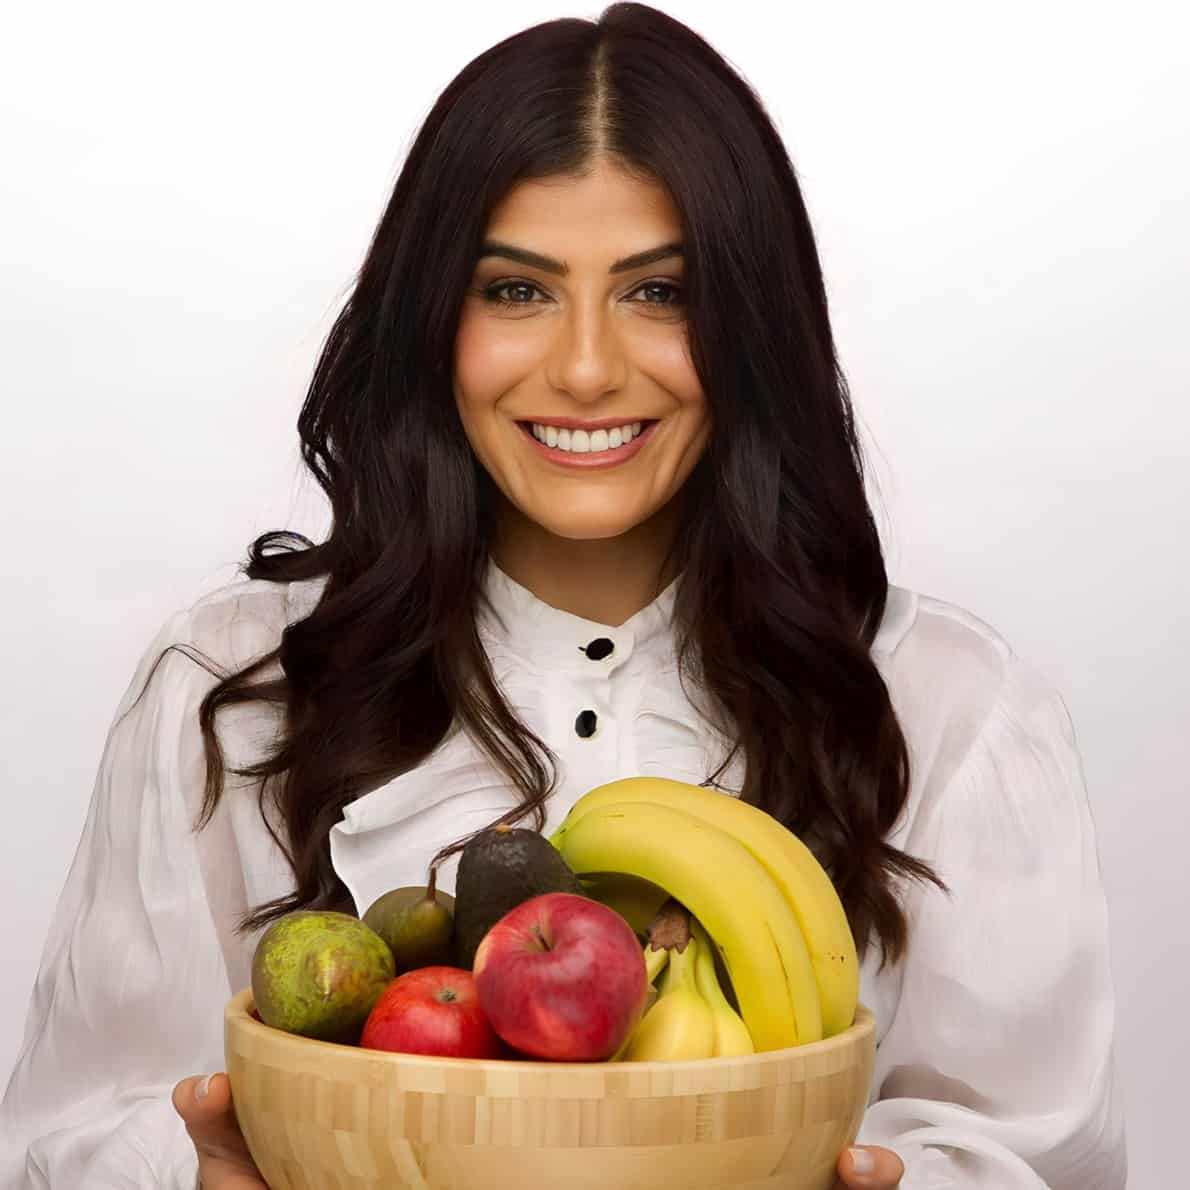 Samira holding a bowl of fruit